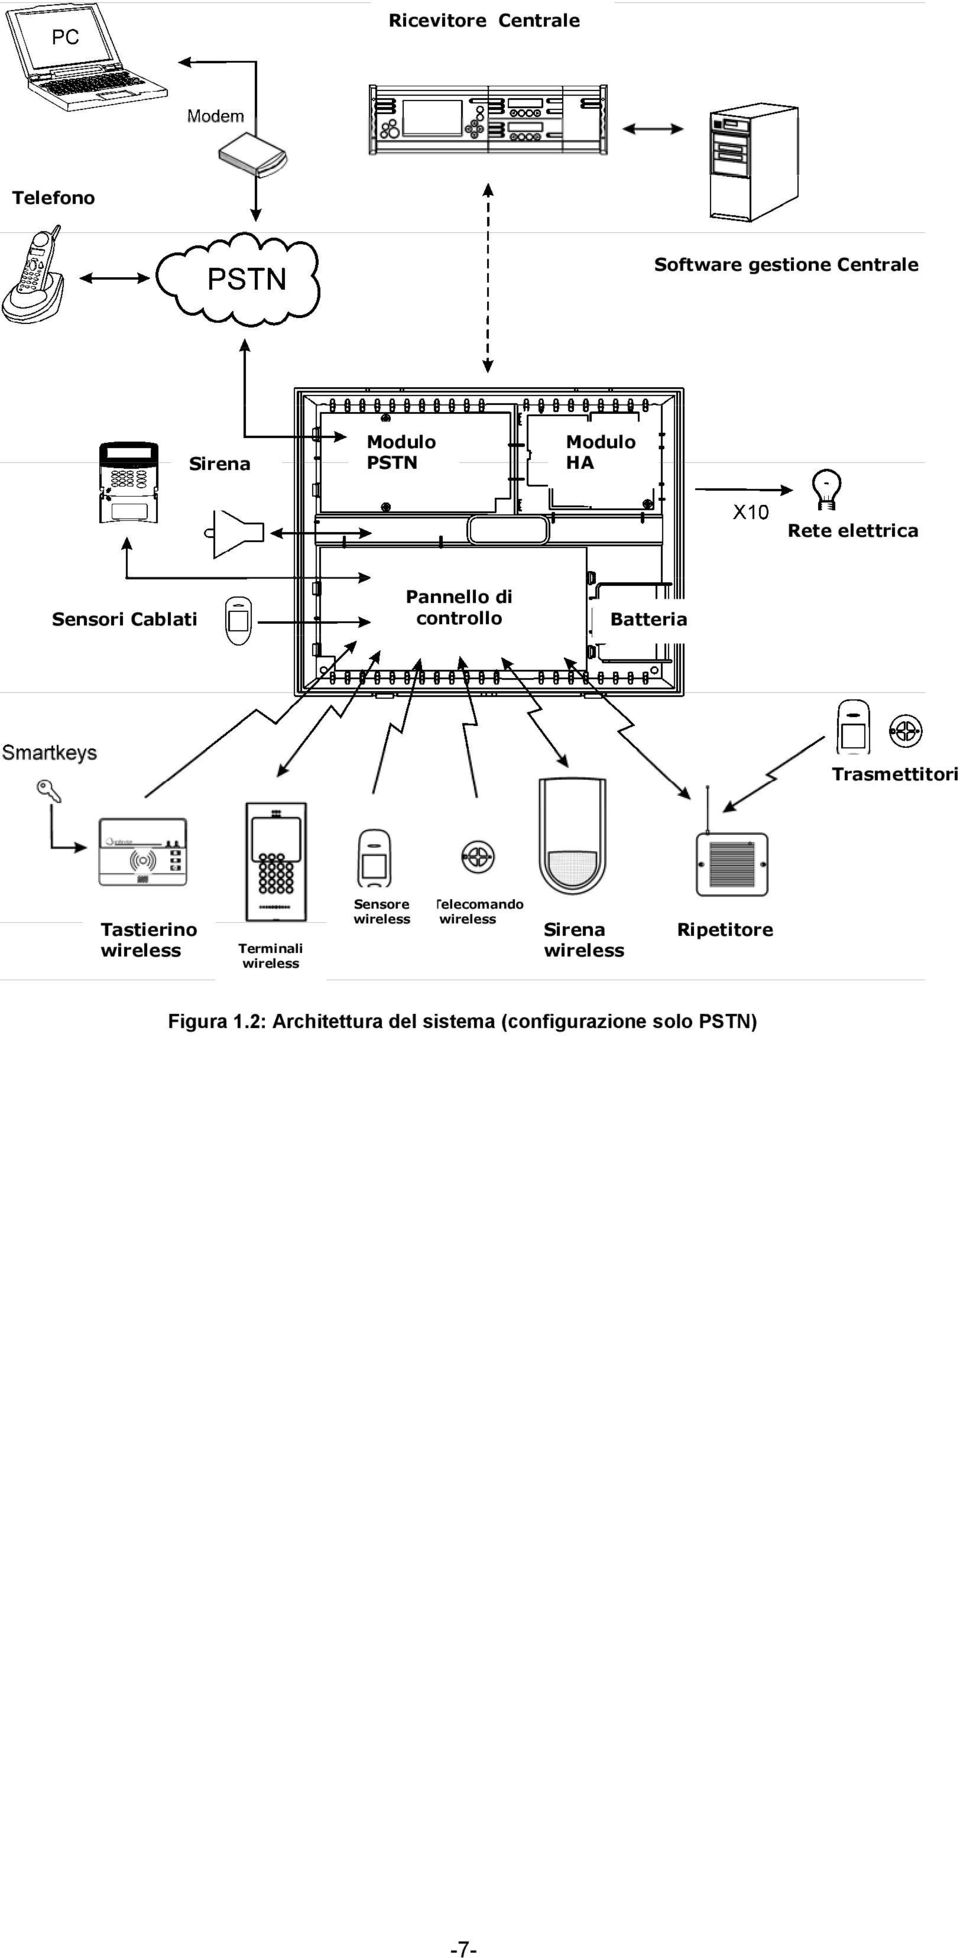 Tastierino wireless Terminali wireless Sensore wireless Telecomando wireless